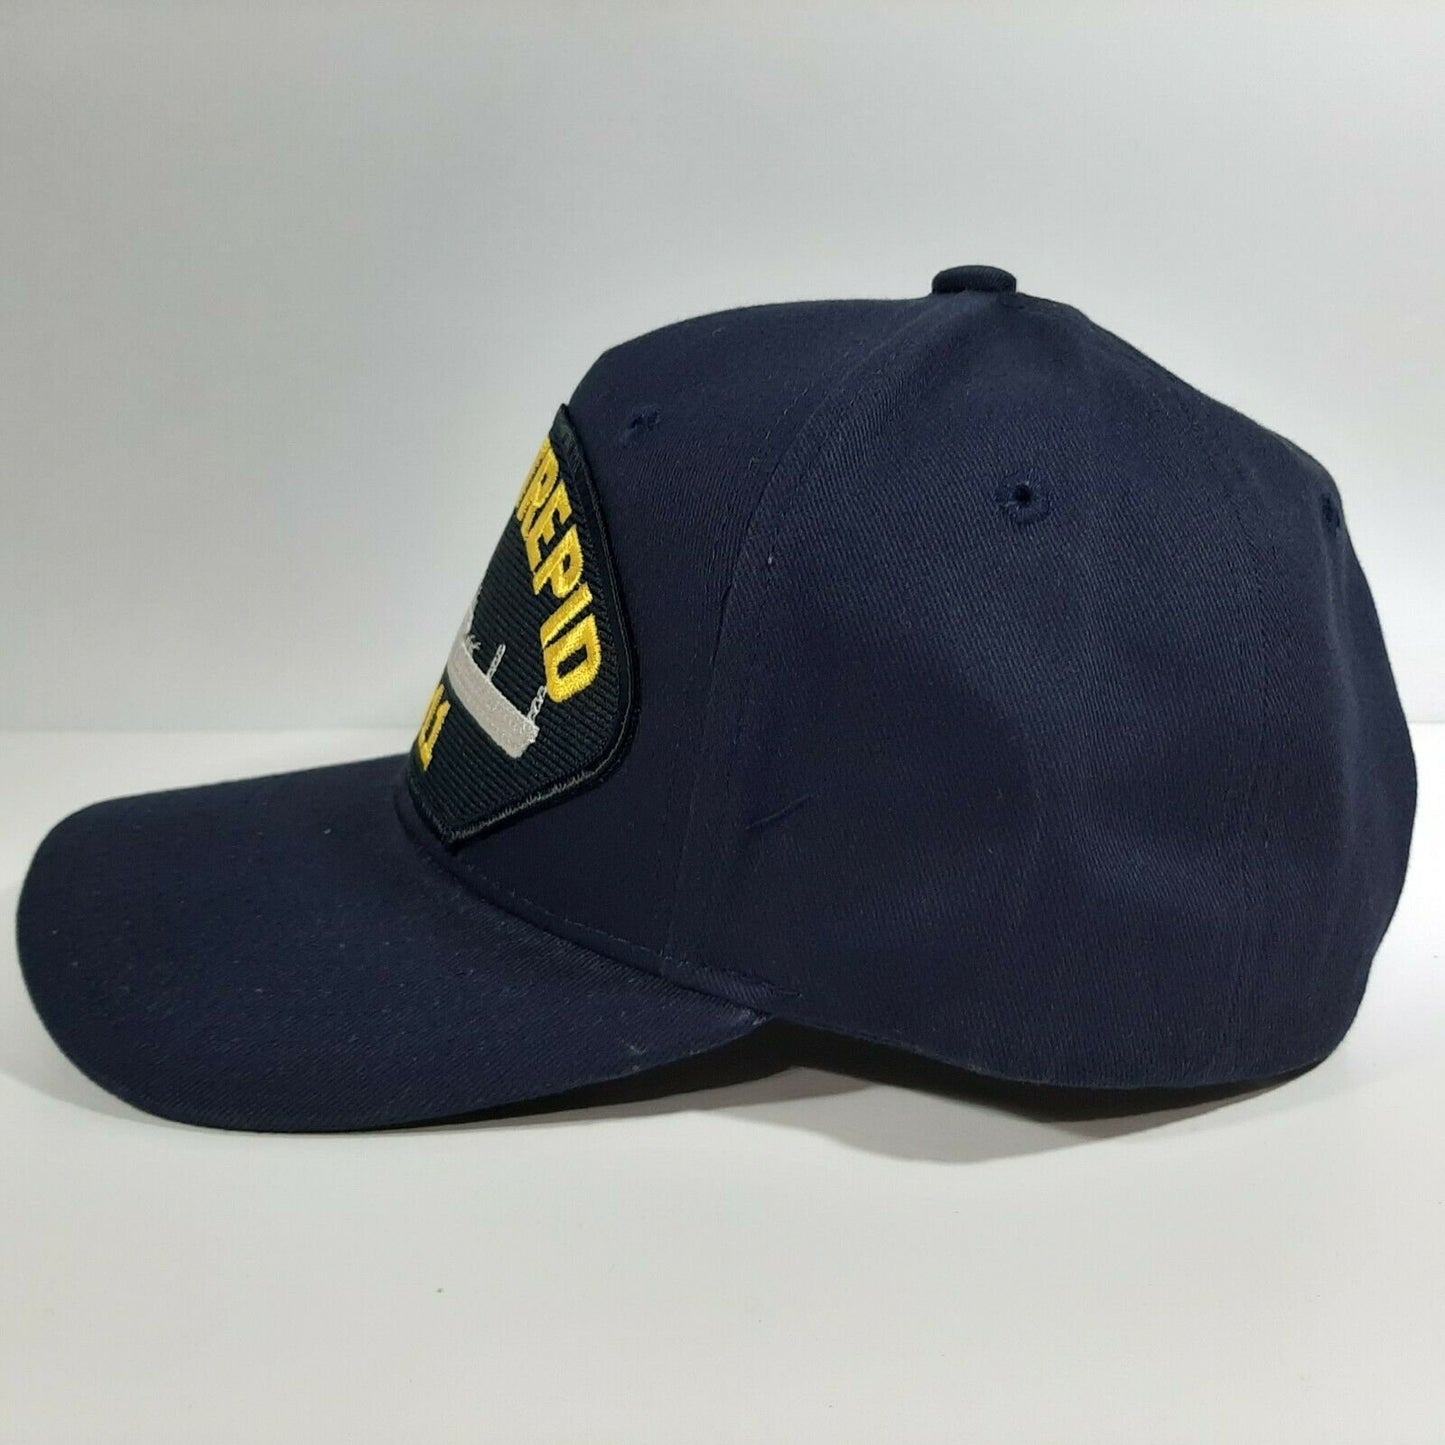 USS Intrepid CV-11 Embroidered Patch Hat Baseball Cap Blue Adjustable Strapback Acrylic